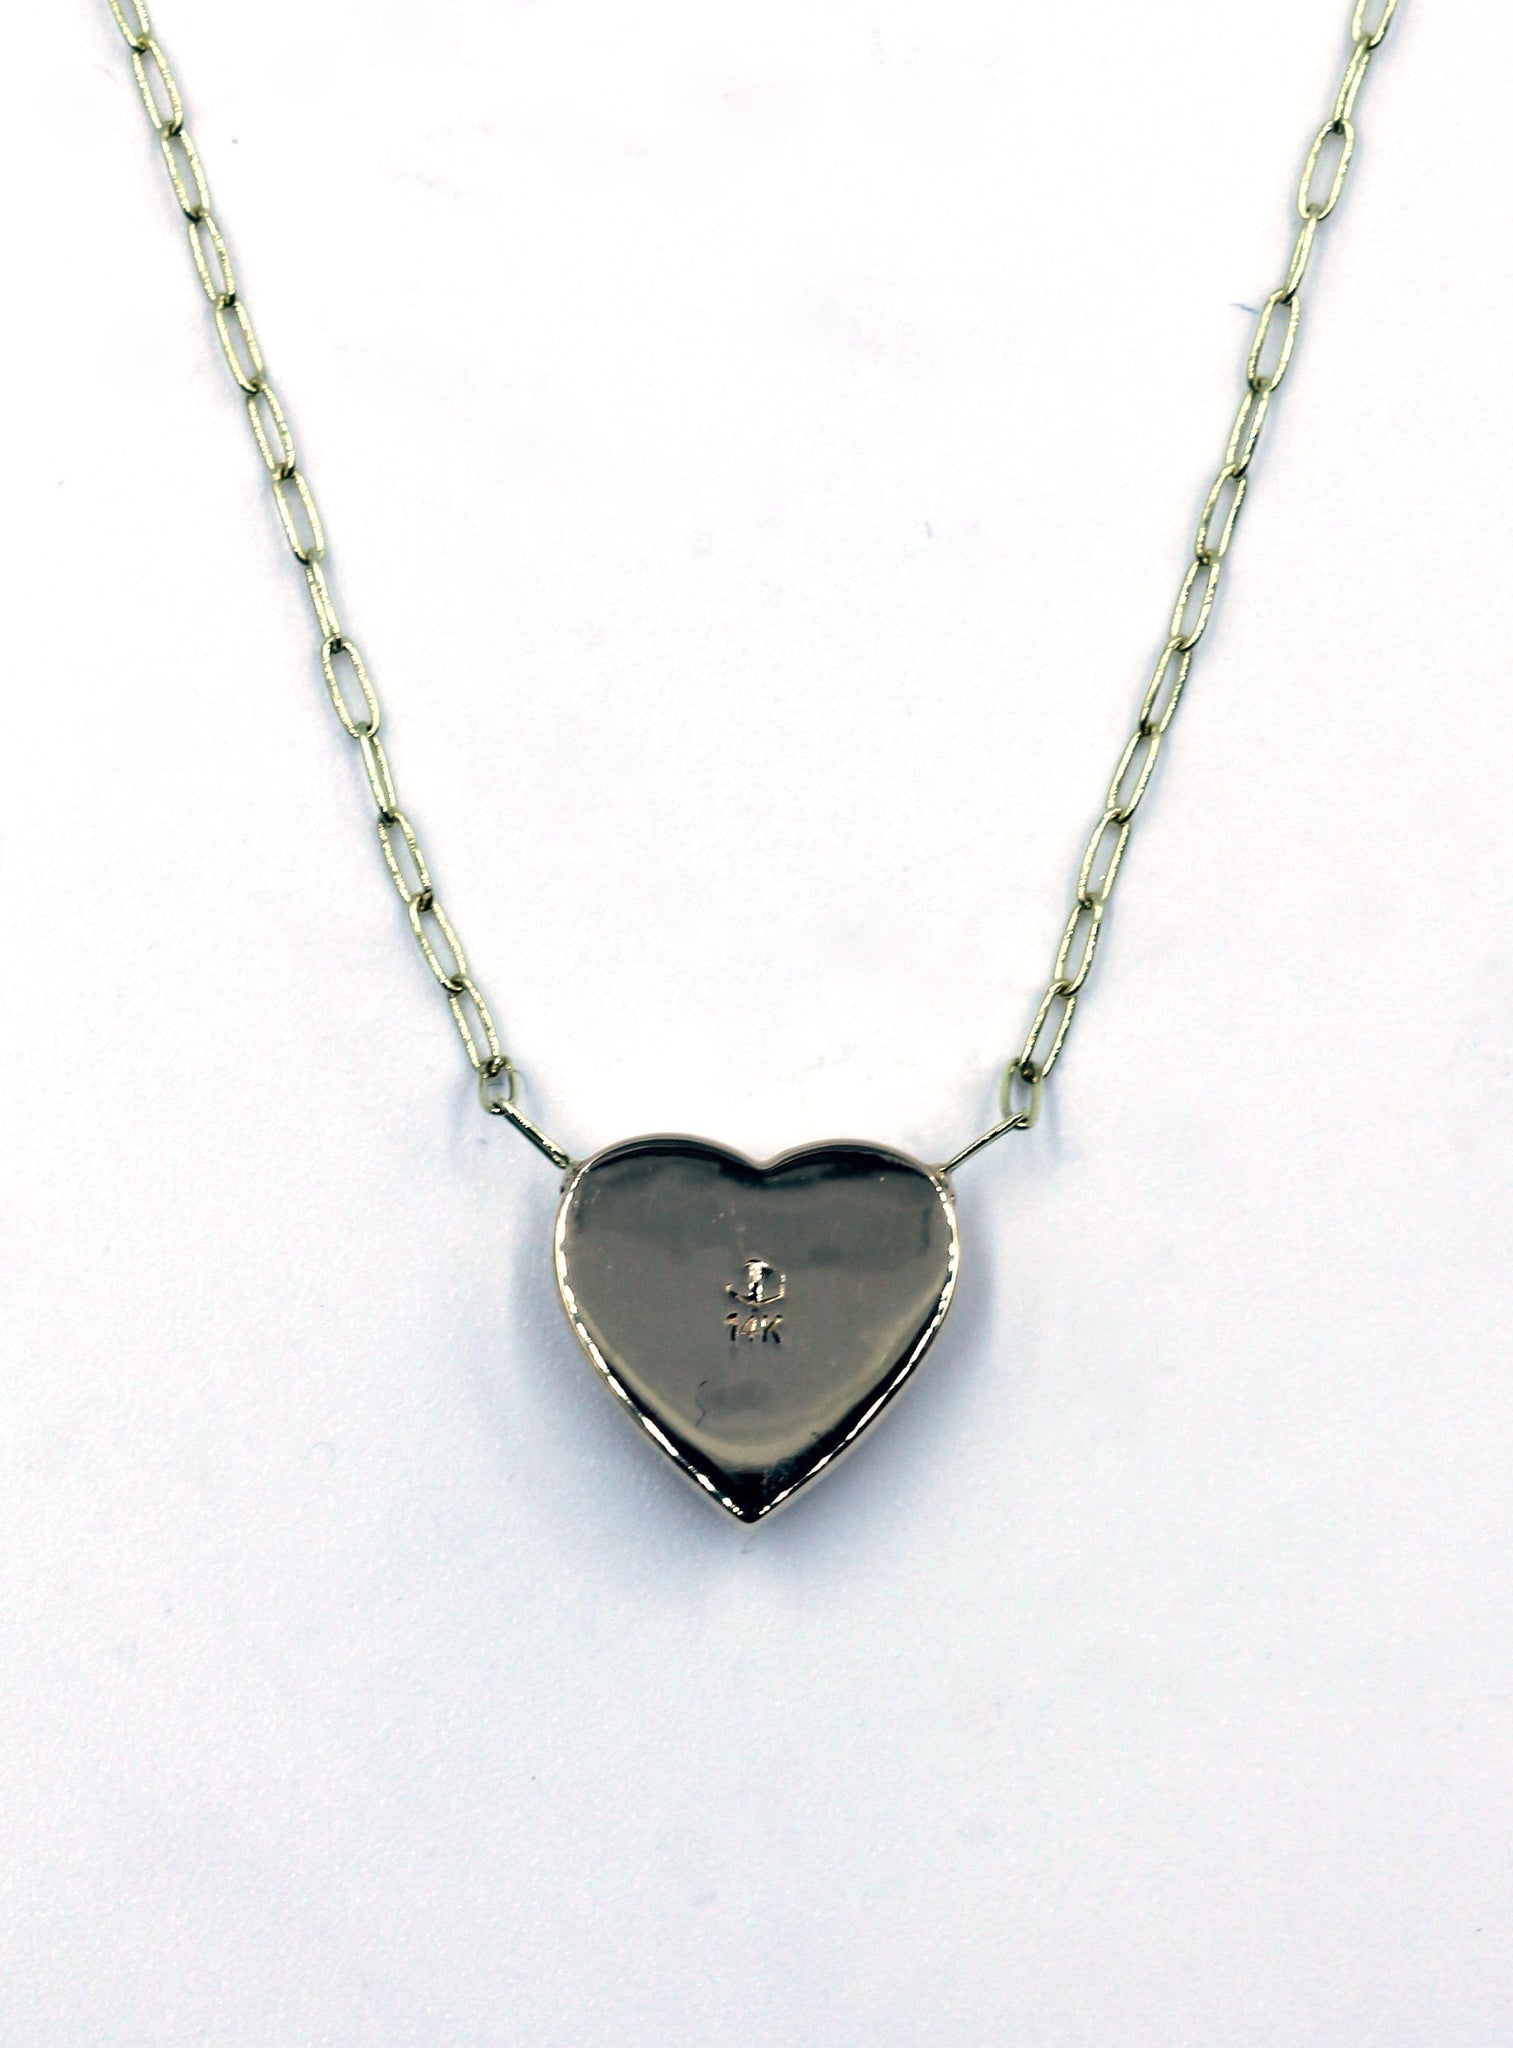 Janet Deleuse Diamond Heart Necklace